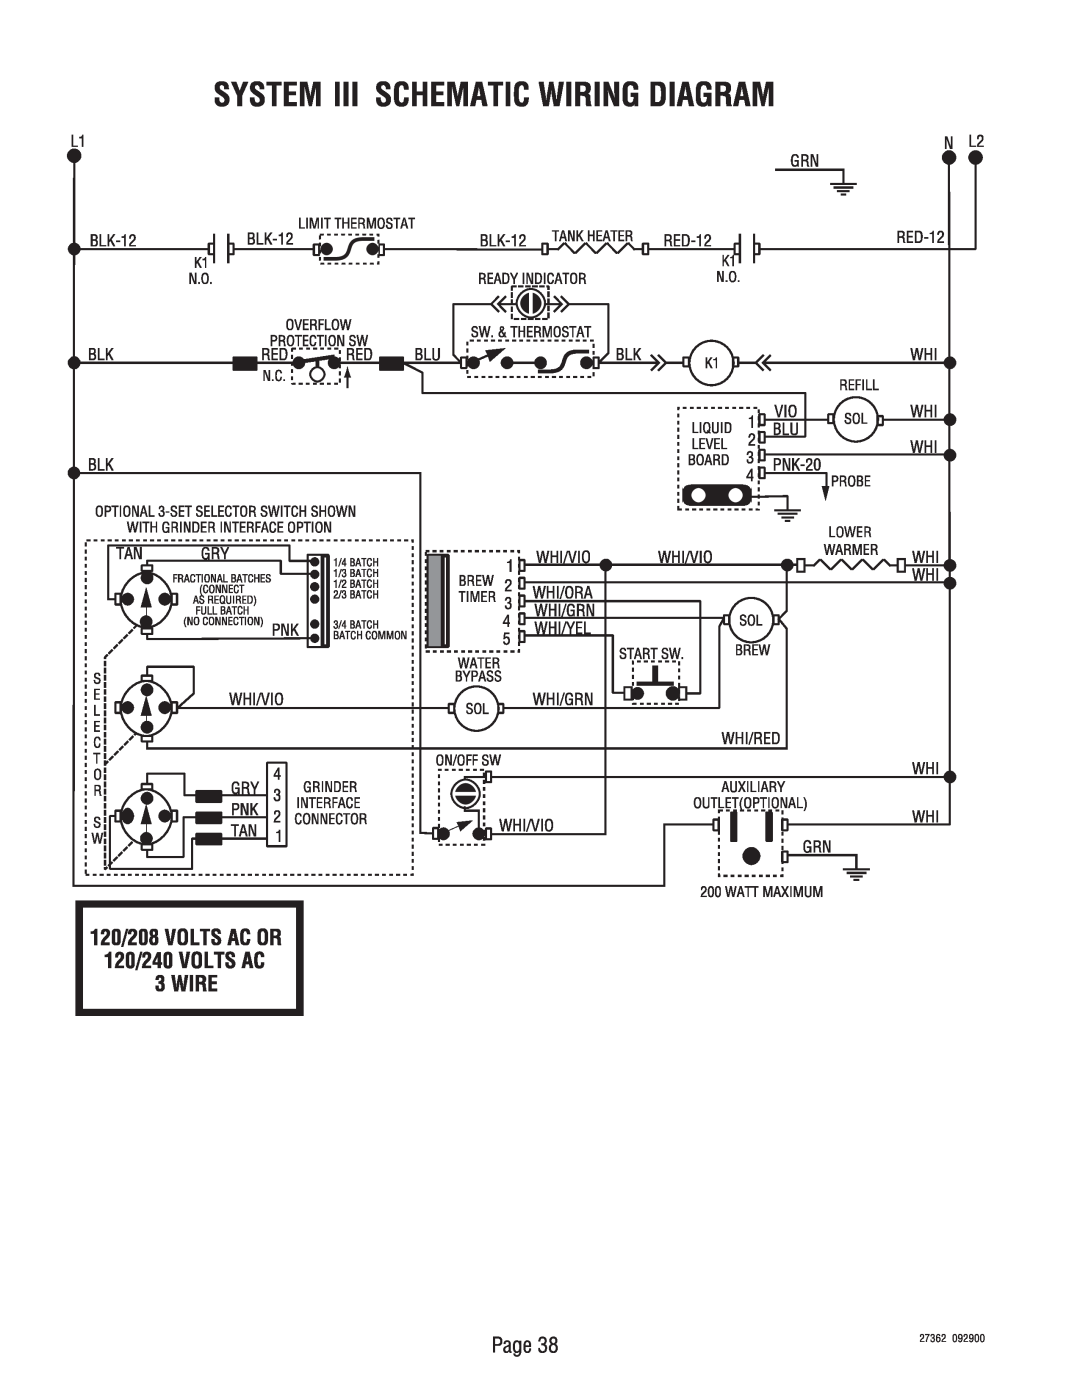 Bunn System III manual Page, Lower, 27362, 092900 